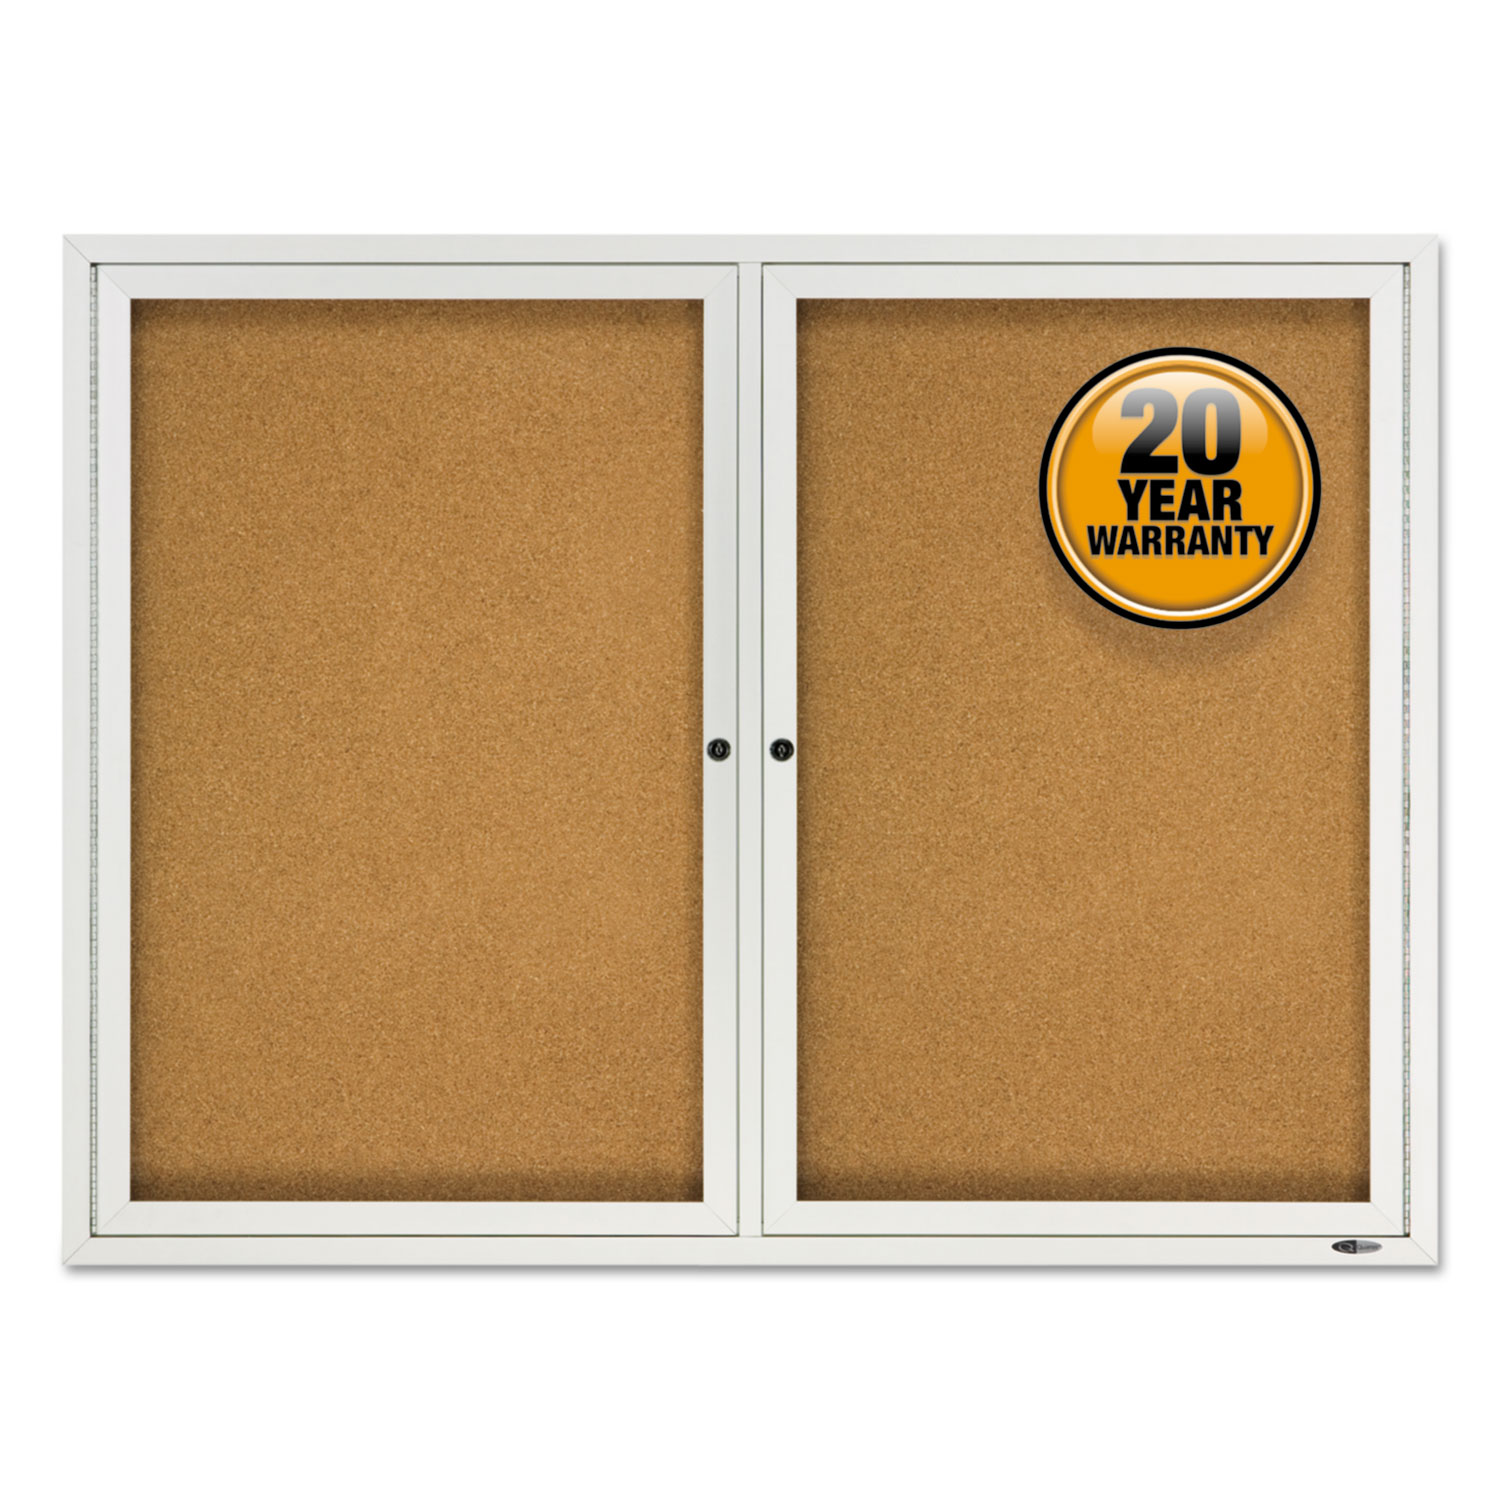  Quartet 2124 Enclosed Cork Bulletin Board, Cork/Fiberboard, 48 x 36, Silver Aluminum Frame (QRT2124) 